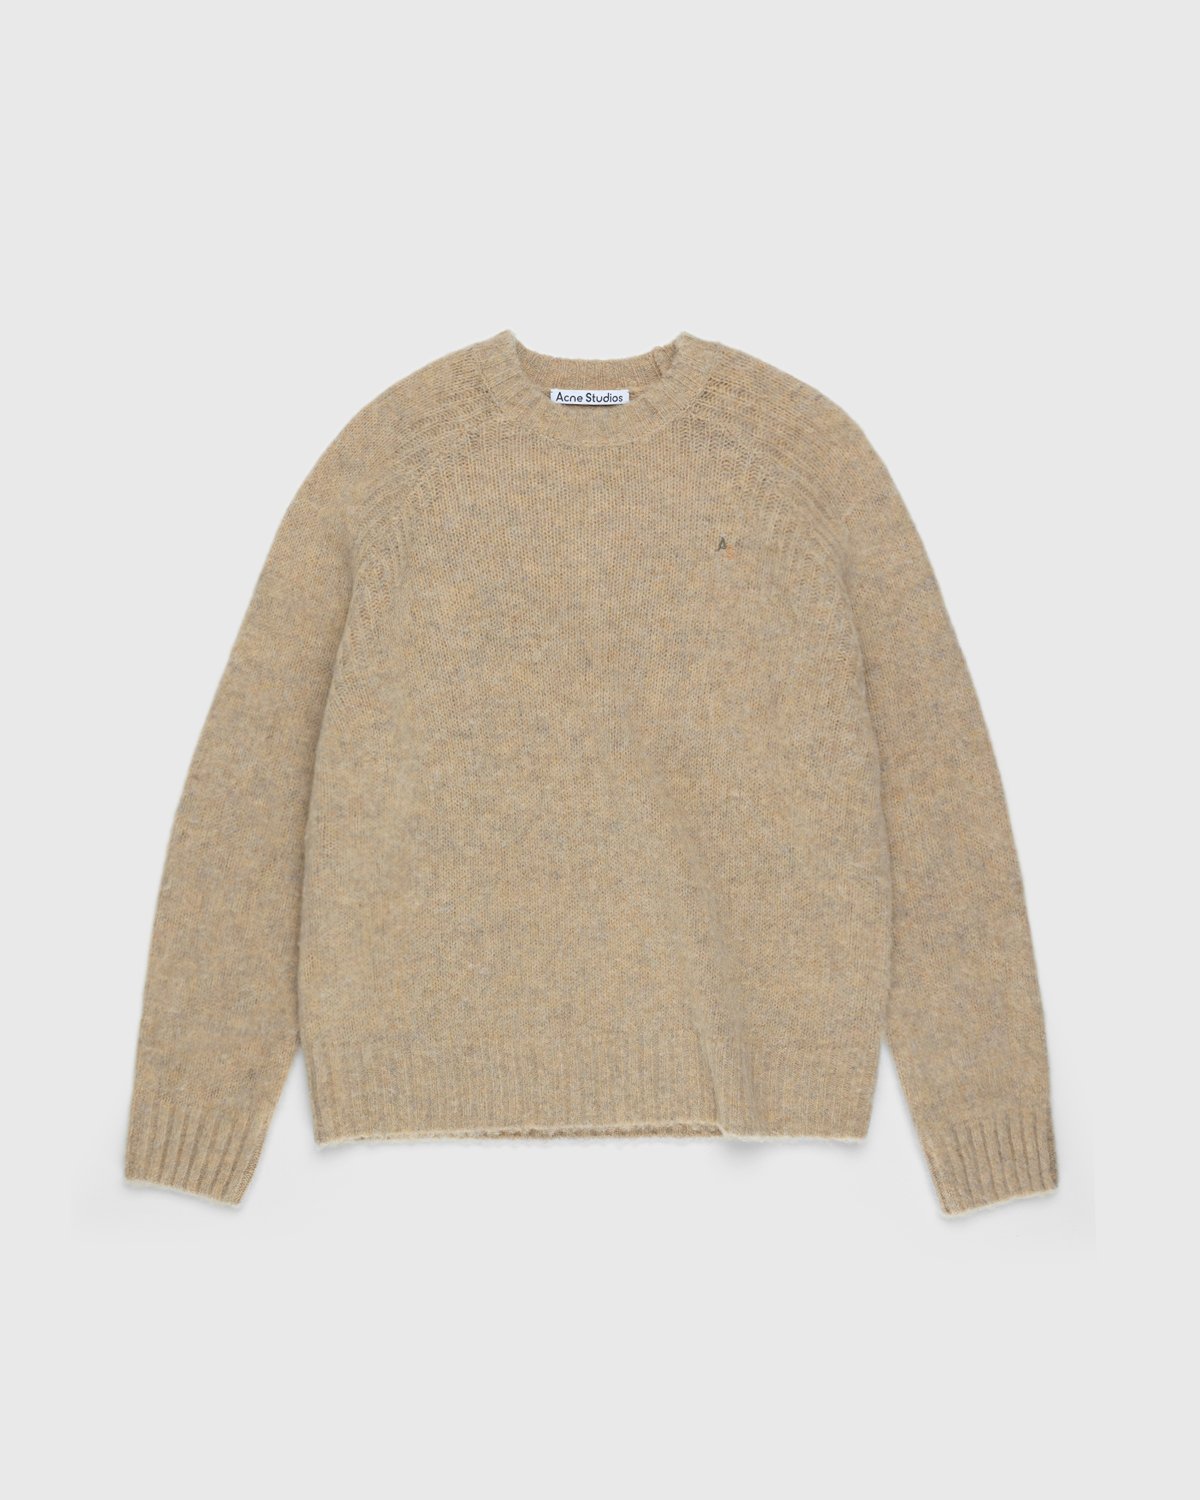 Acne Studios - Brushed Wool Crewneck Sweater Toffee Brown - Clothing - Brown - Image 1